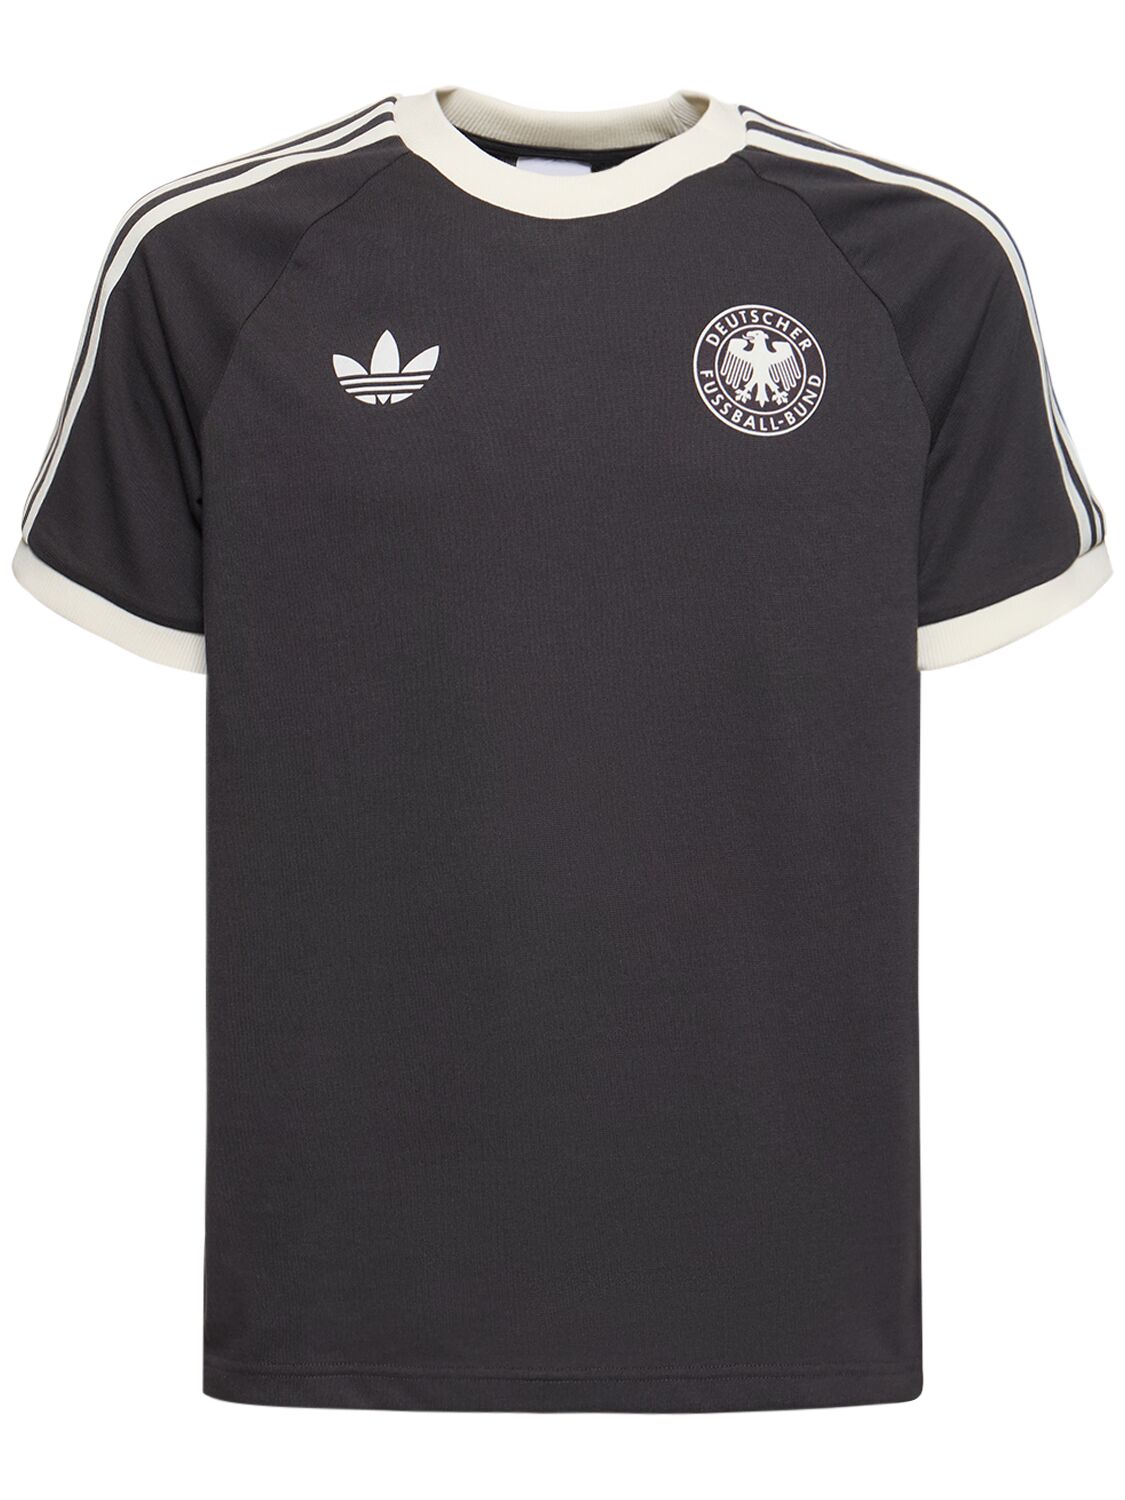 Adidas Originals Germany T恤 In Black,white